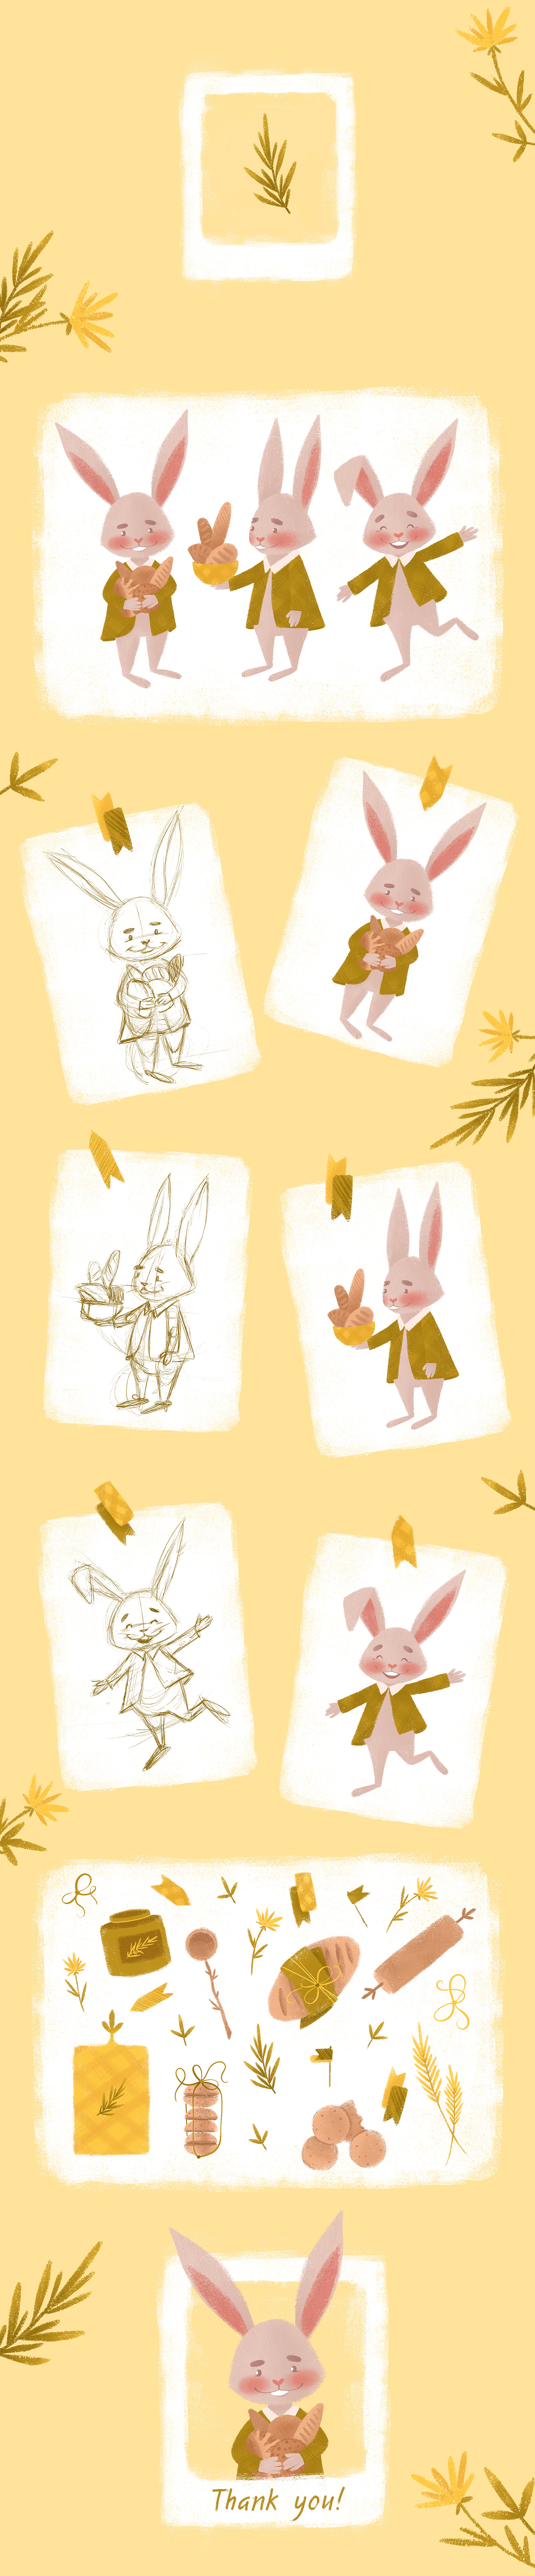 Character design  illustration children book children illustration picturebook kidlitart digital illustration Picture book baker rabbit